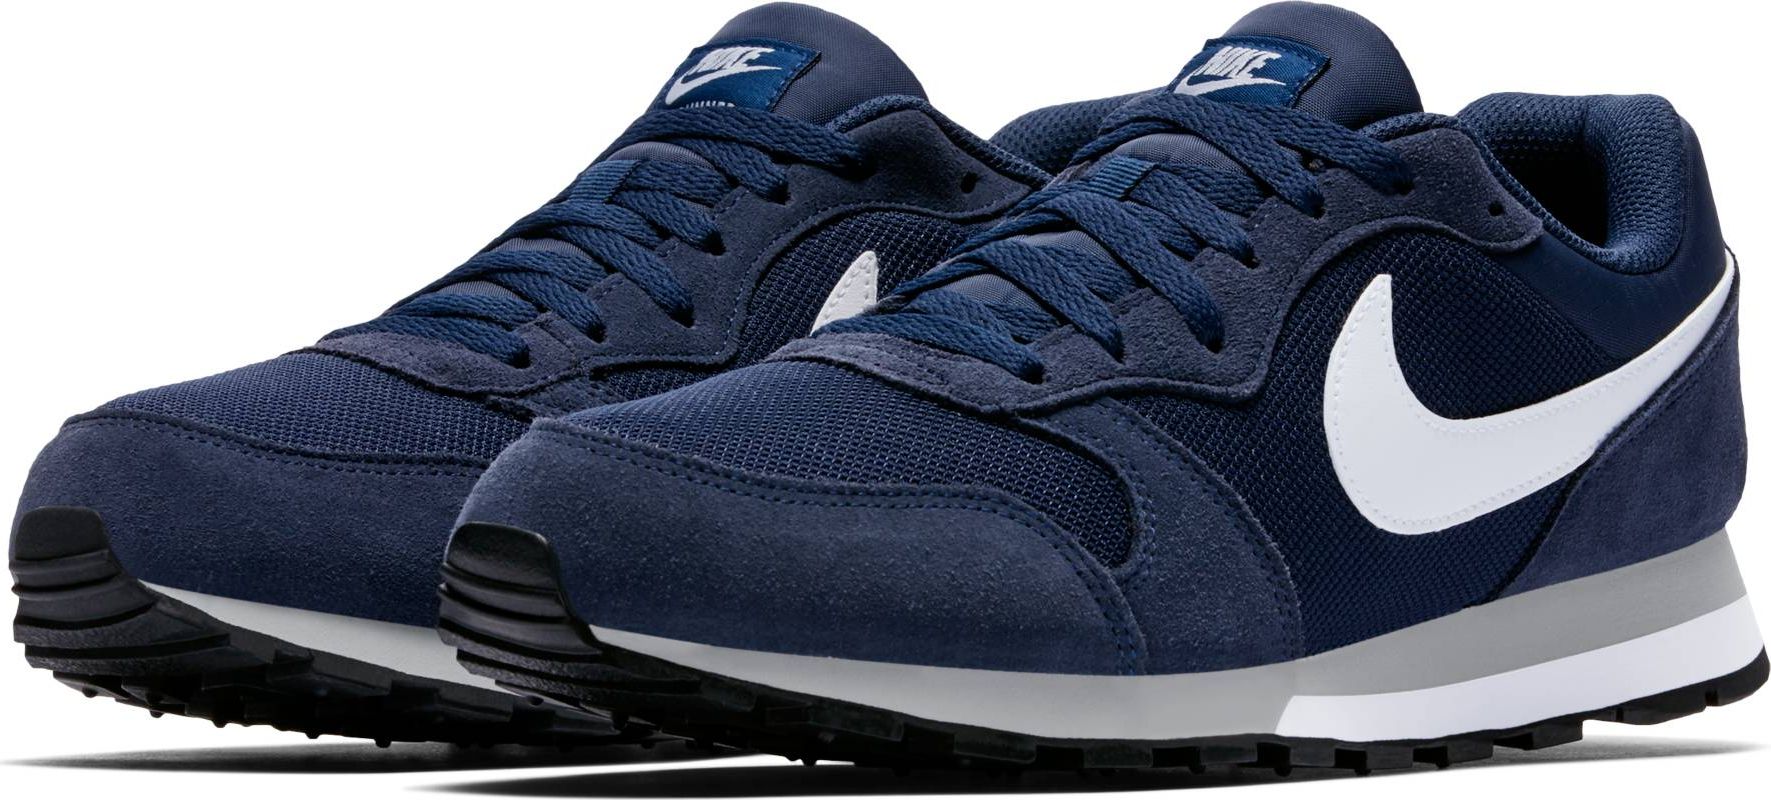 Кроссовки мужские Nike MD Runner 2, цвет: синий. 749794-410. Размер 7 (39)